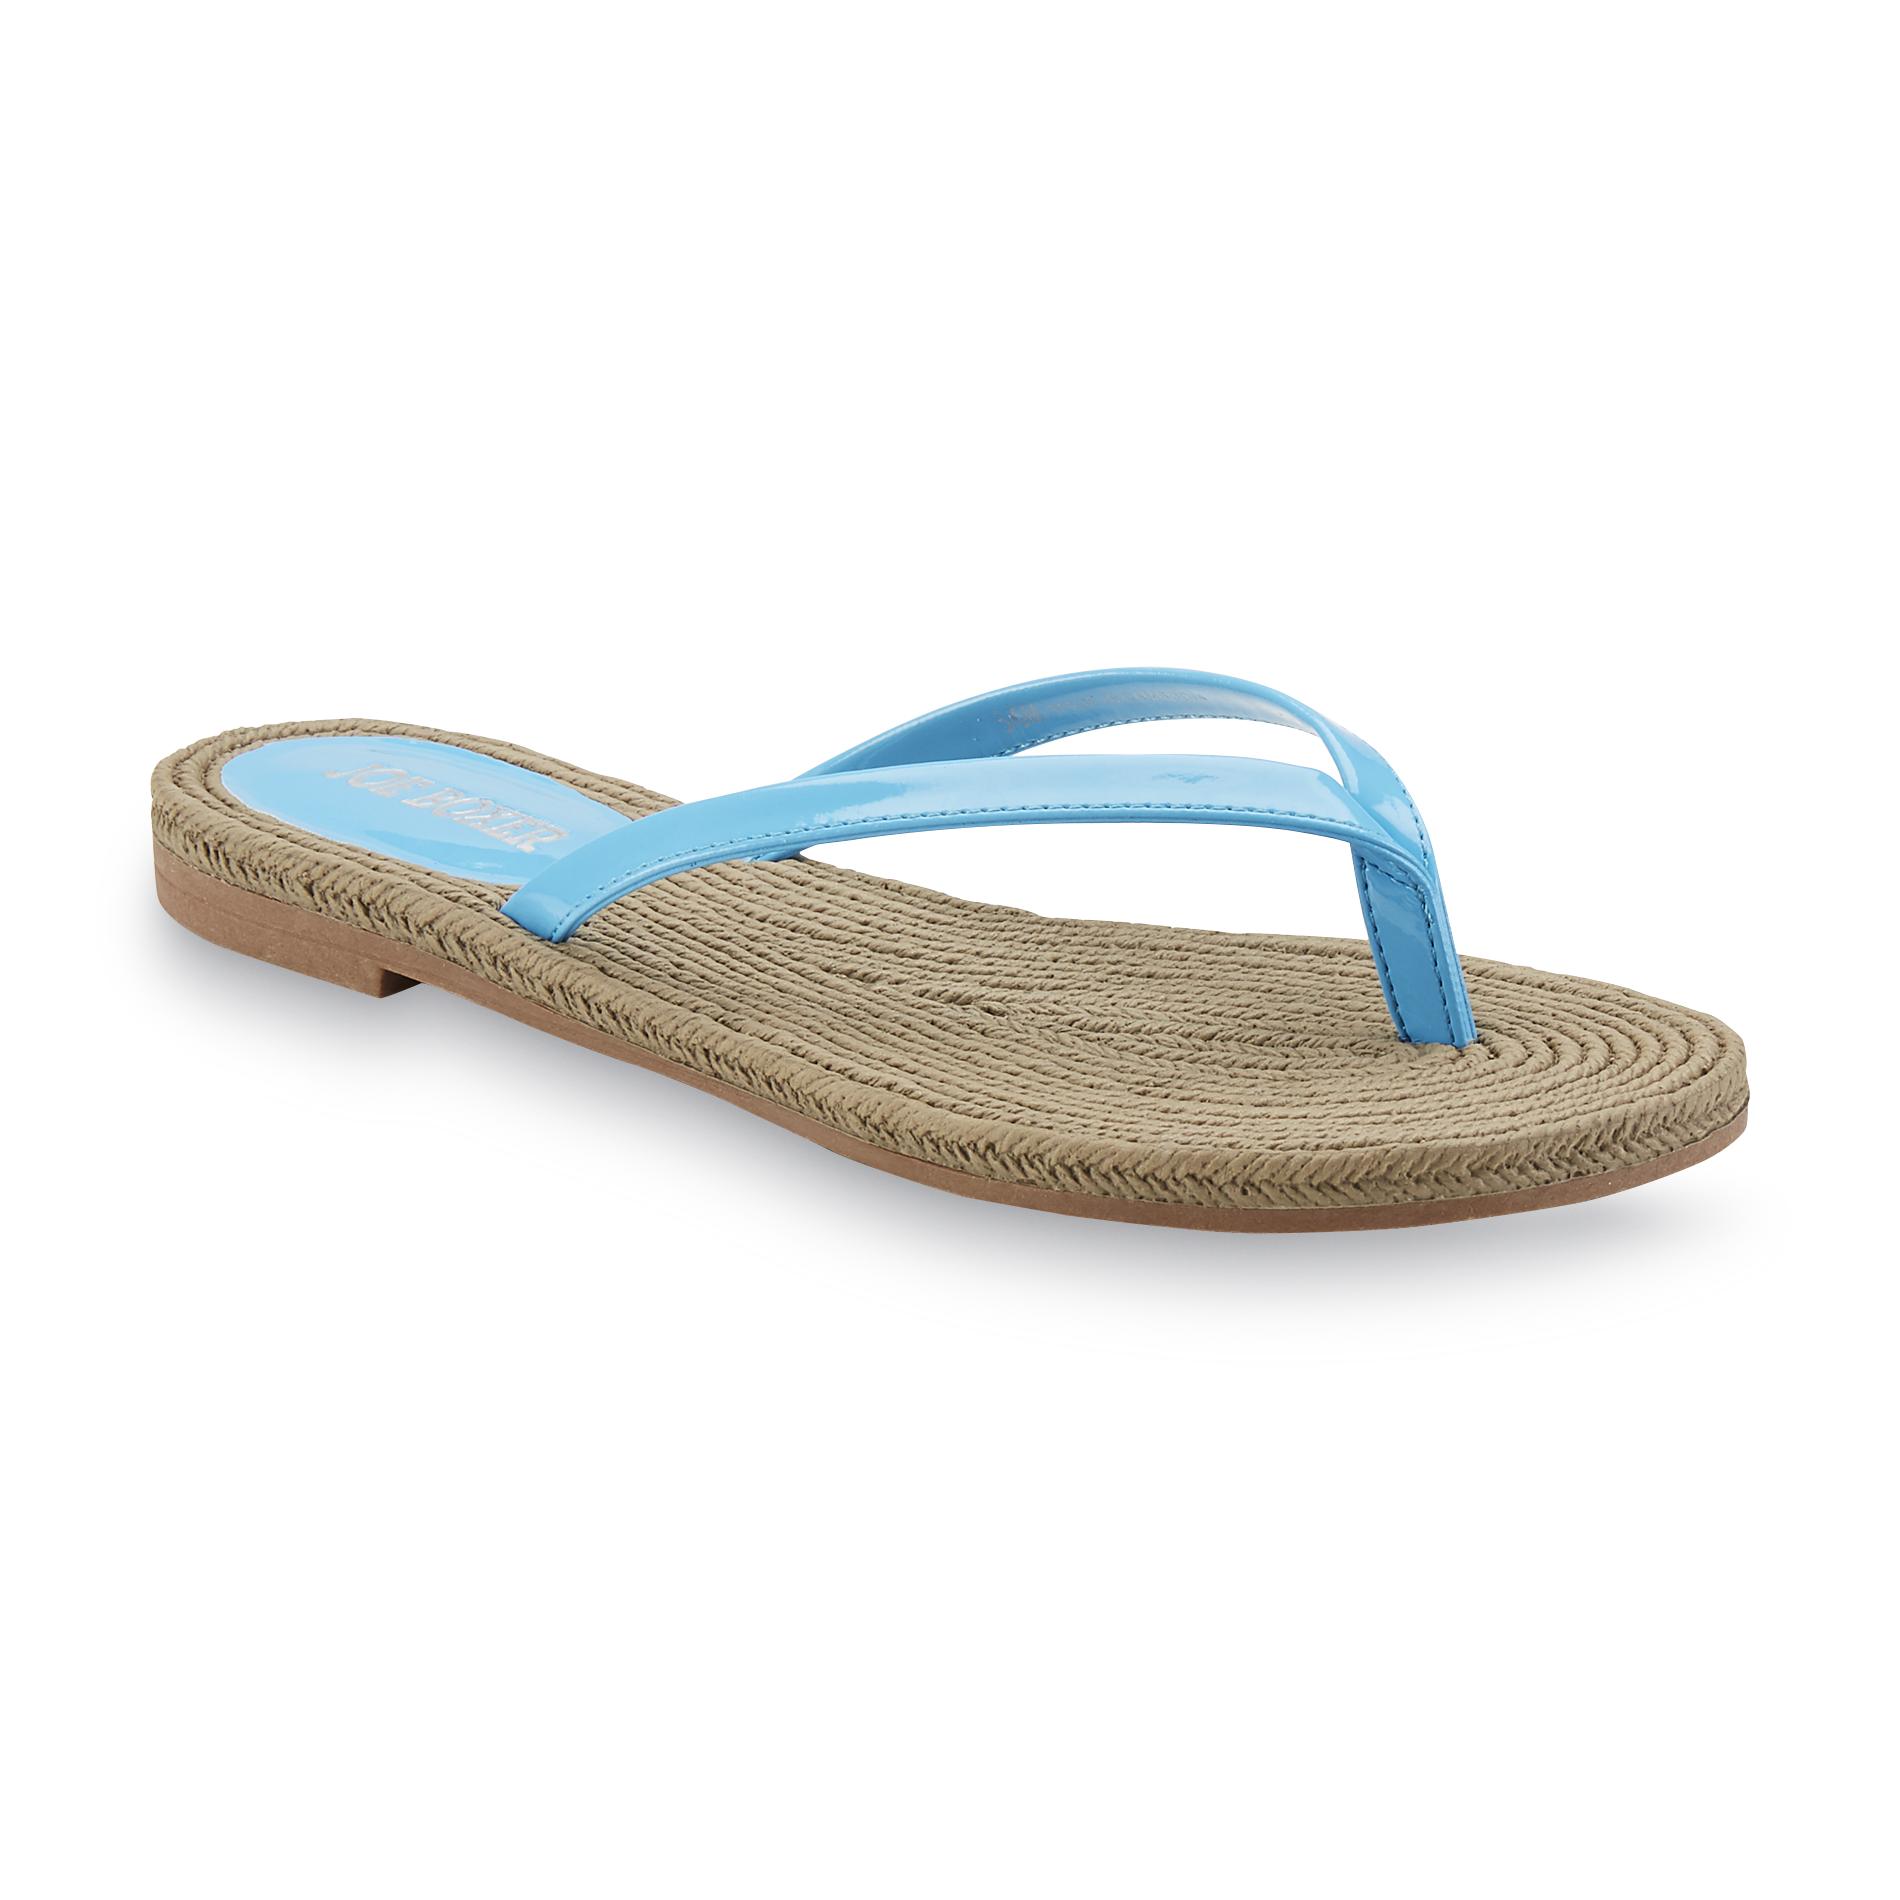 Joe Boxer Women's Zaliki Turquoise Flip-Flop Sandal